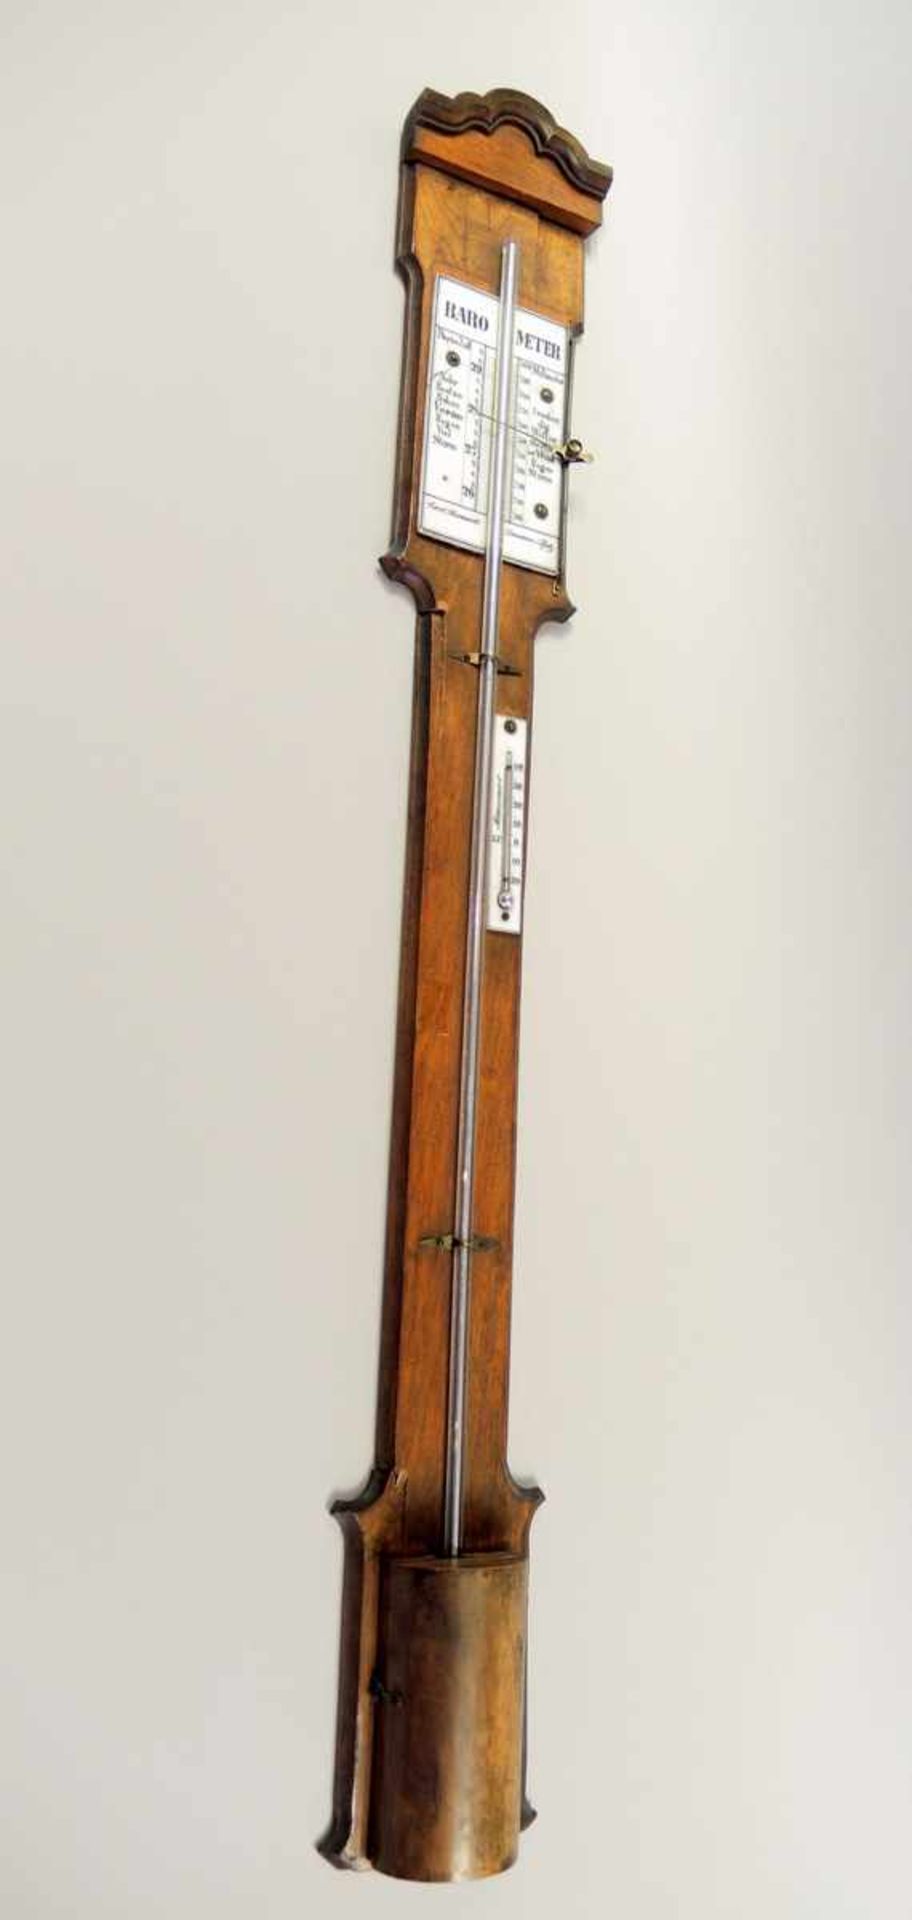 Altes Barometer Karl Hammell Landau in Pfalz. Gebrochen. Um 1850. L ca. 100 cm